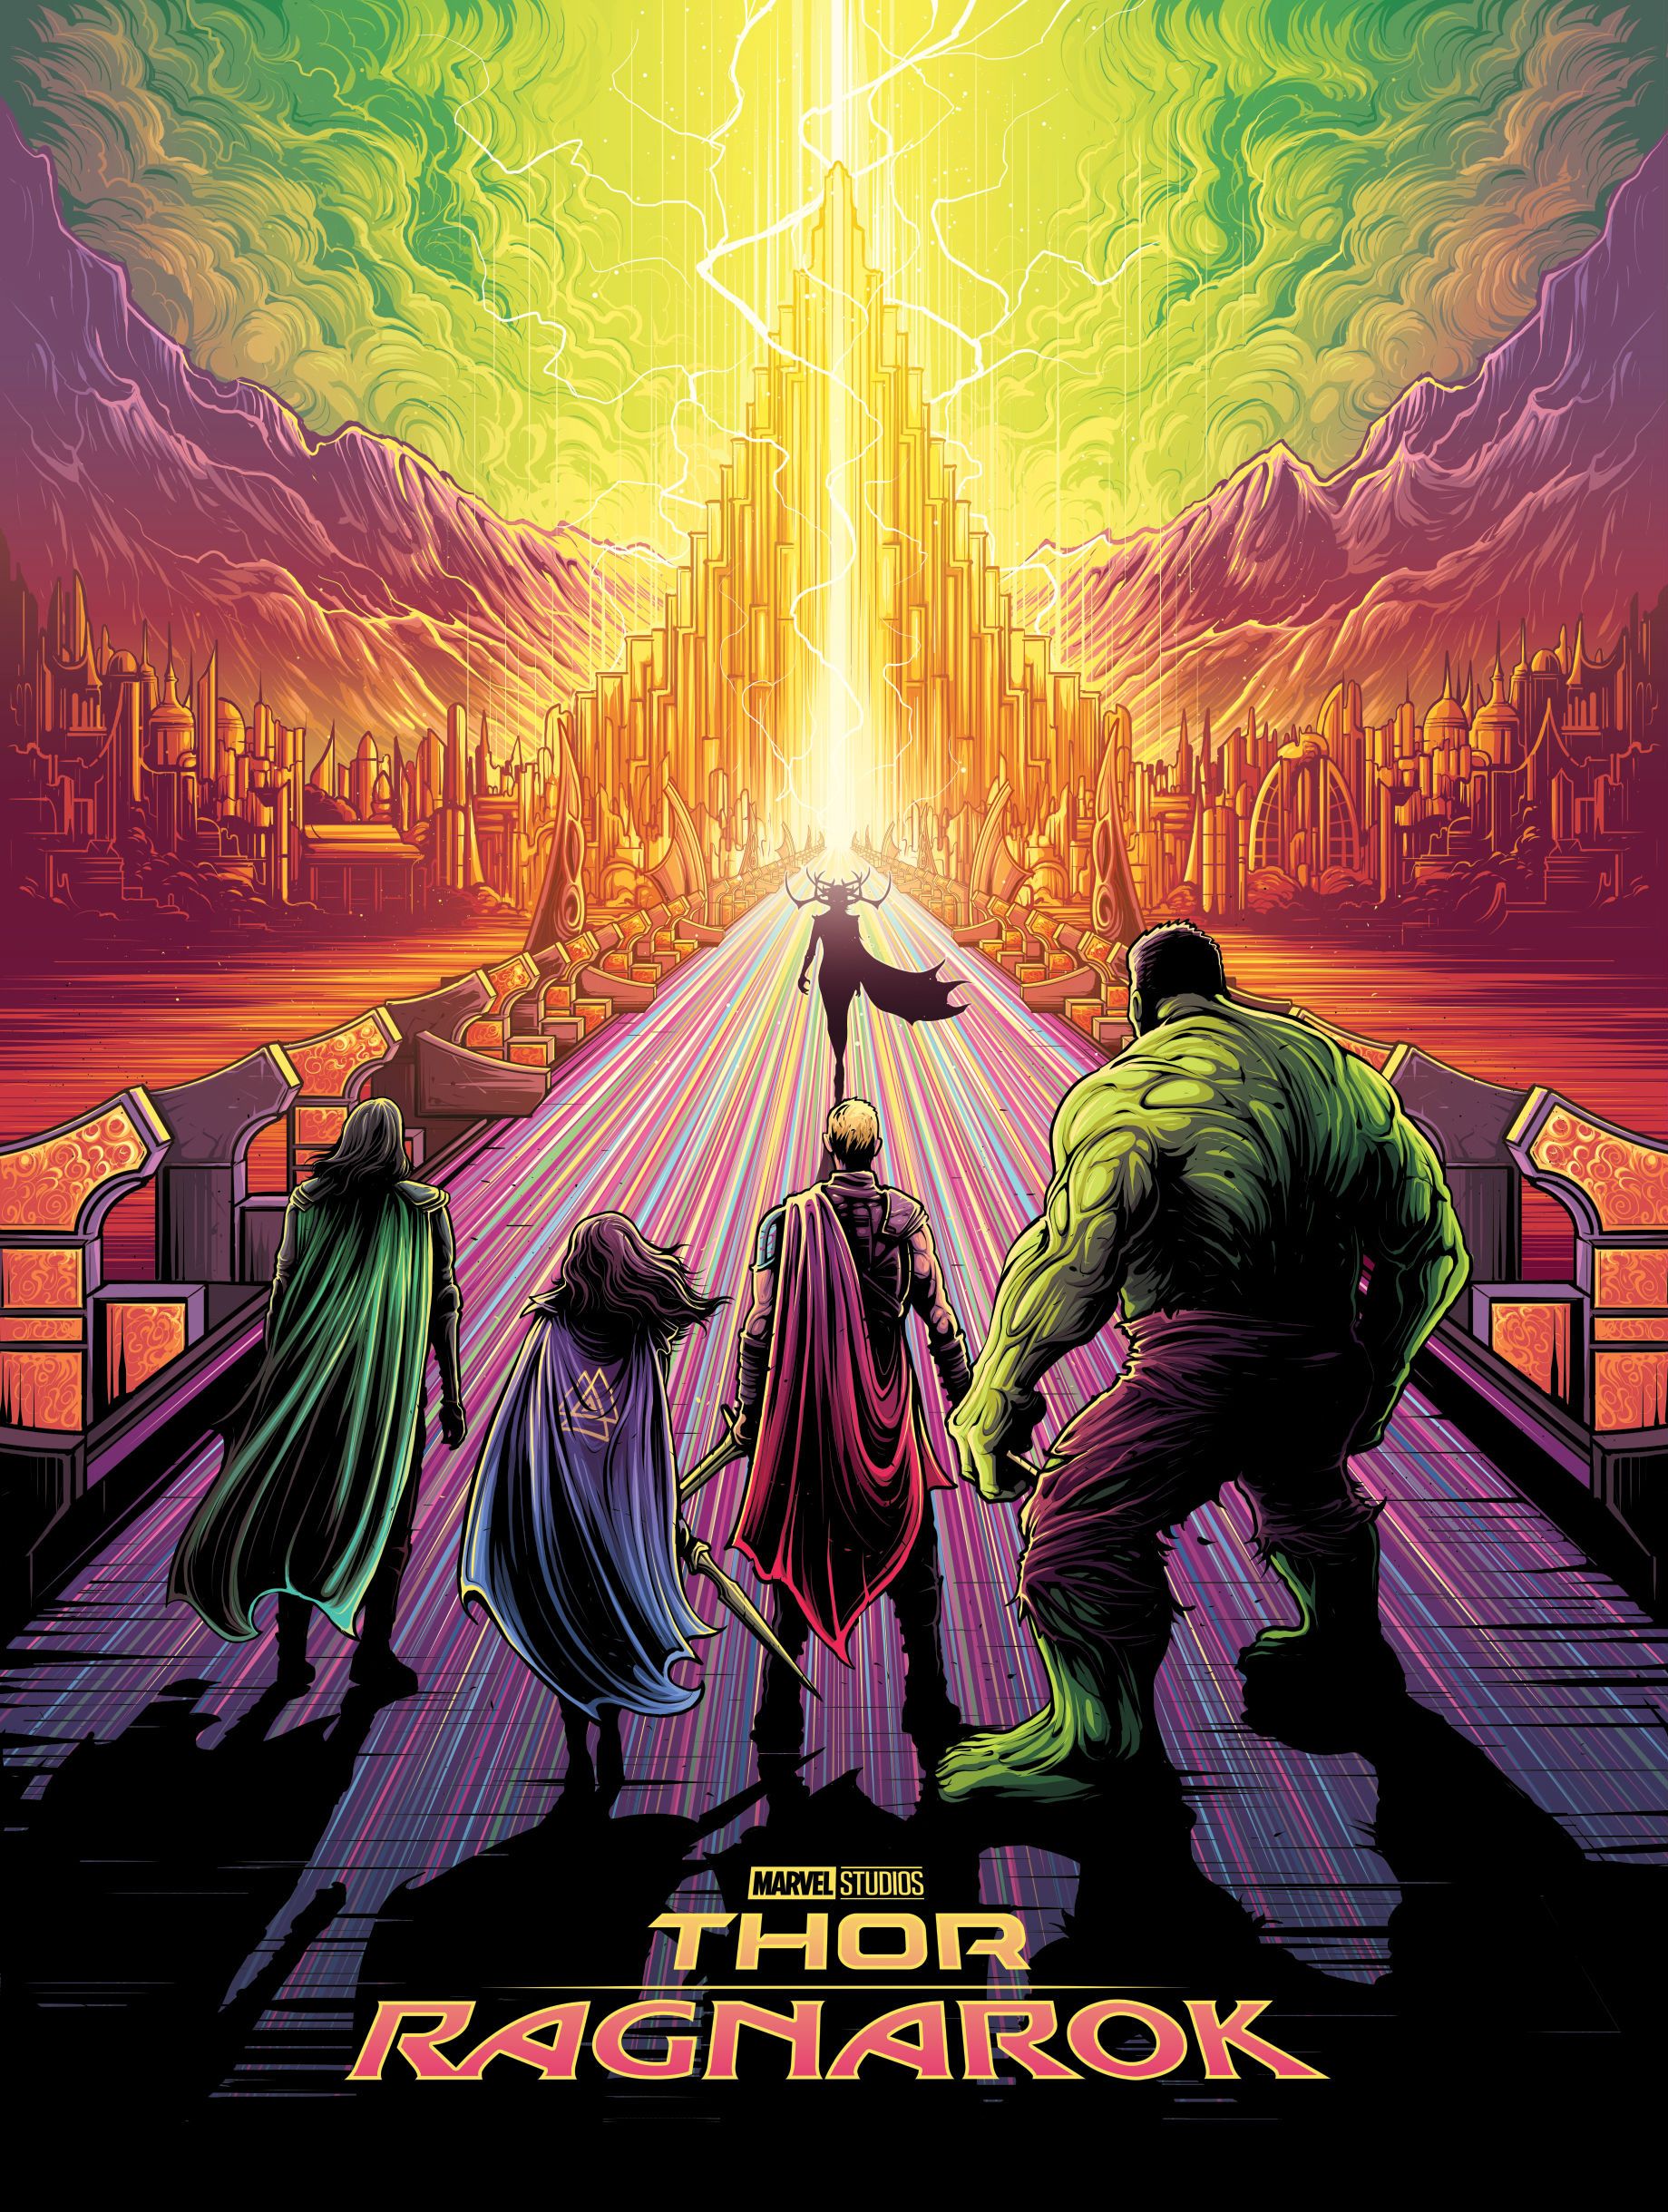 New Thor Ragnarok poster from Dan Mumford